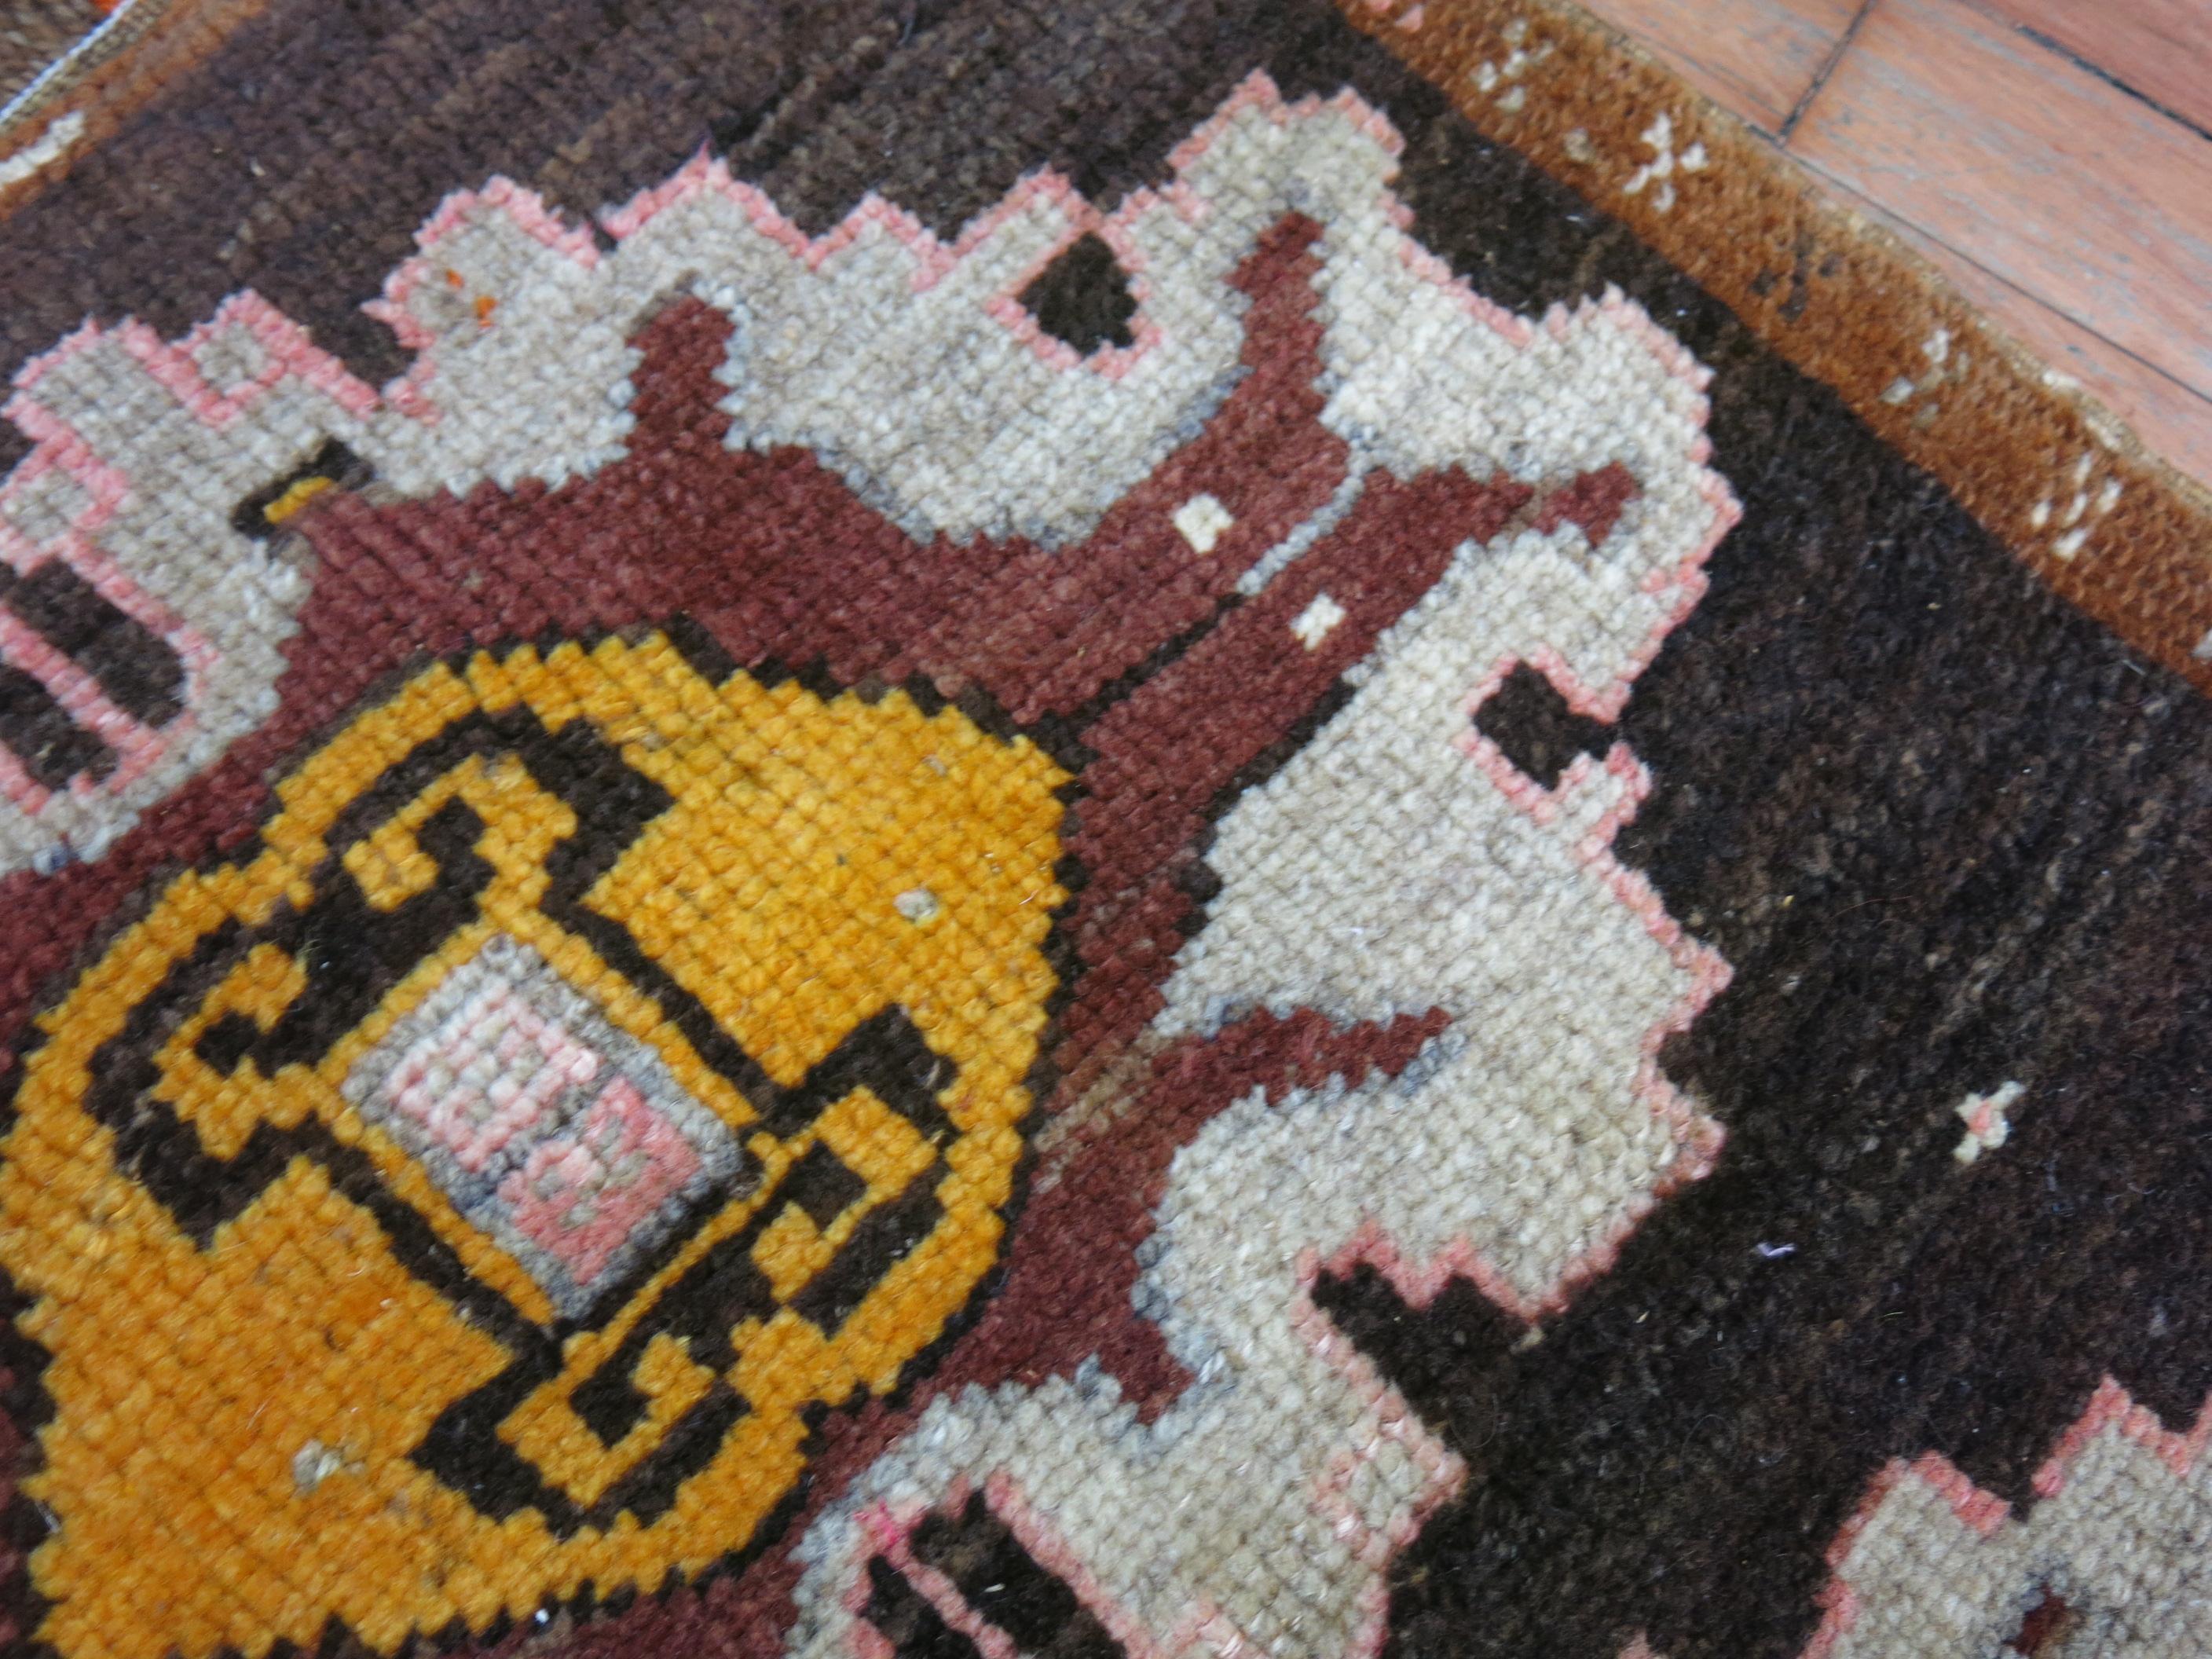 Mid 20th century Tribal Turkish rug

Measures: 2' x 2'5